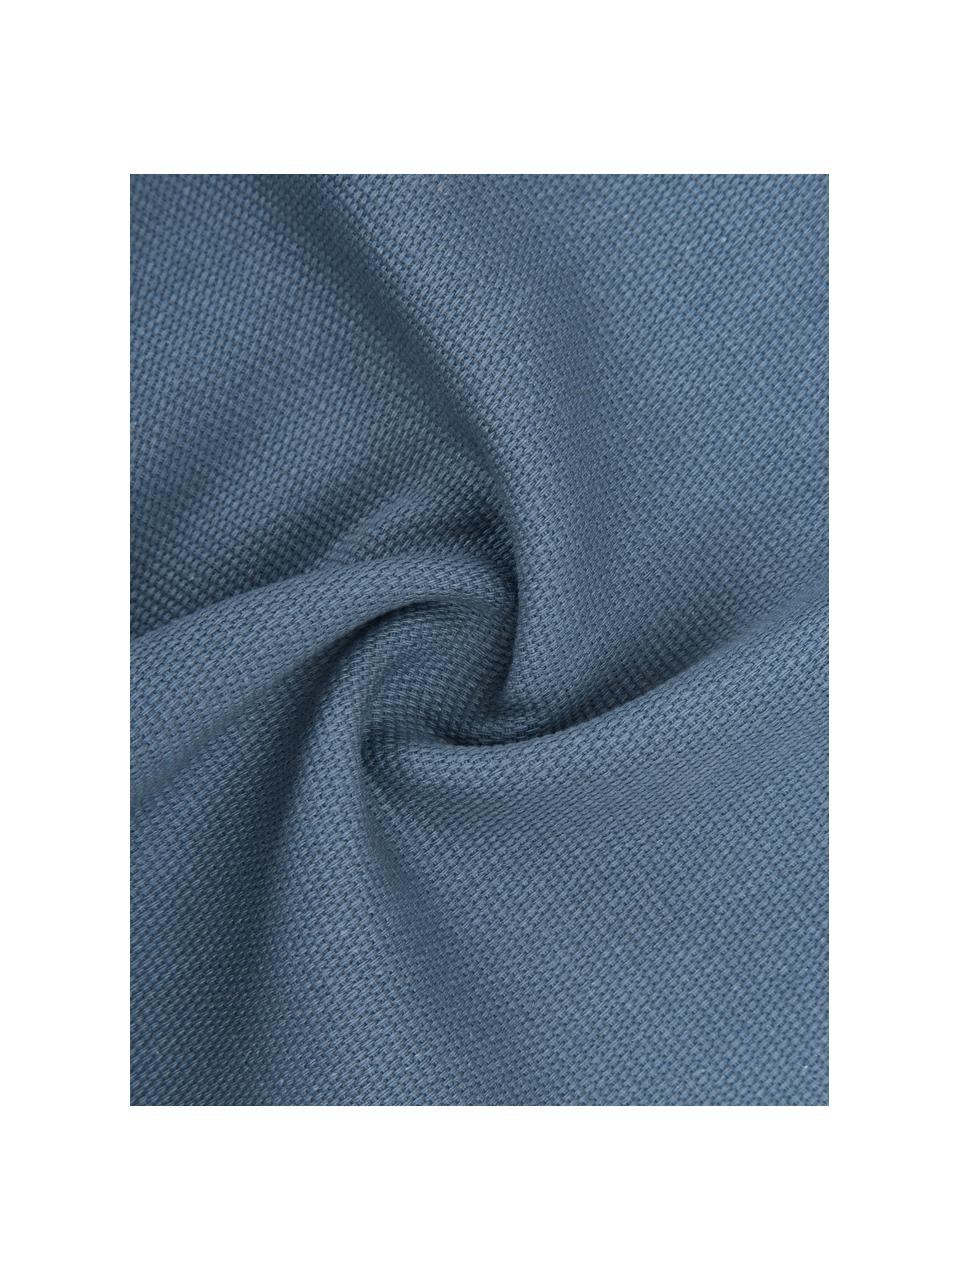 Baumwoll-Kissenhülle Mads in Blau, 100% Baumwolle, Blau, 40 x 40 cm